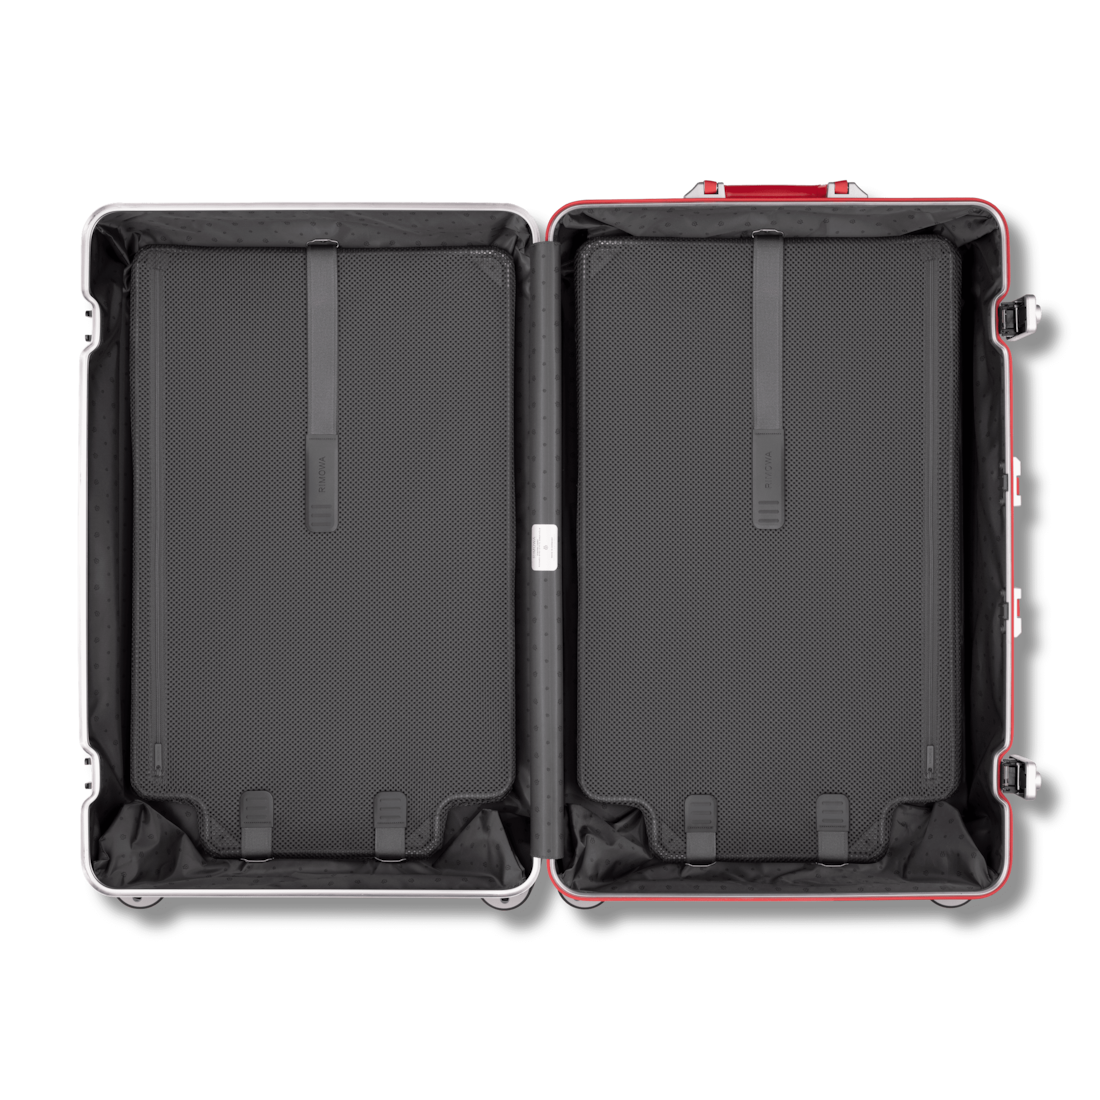 Original Check-In L Twist Suitcase in Silver & Red | RIMOWA